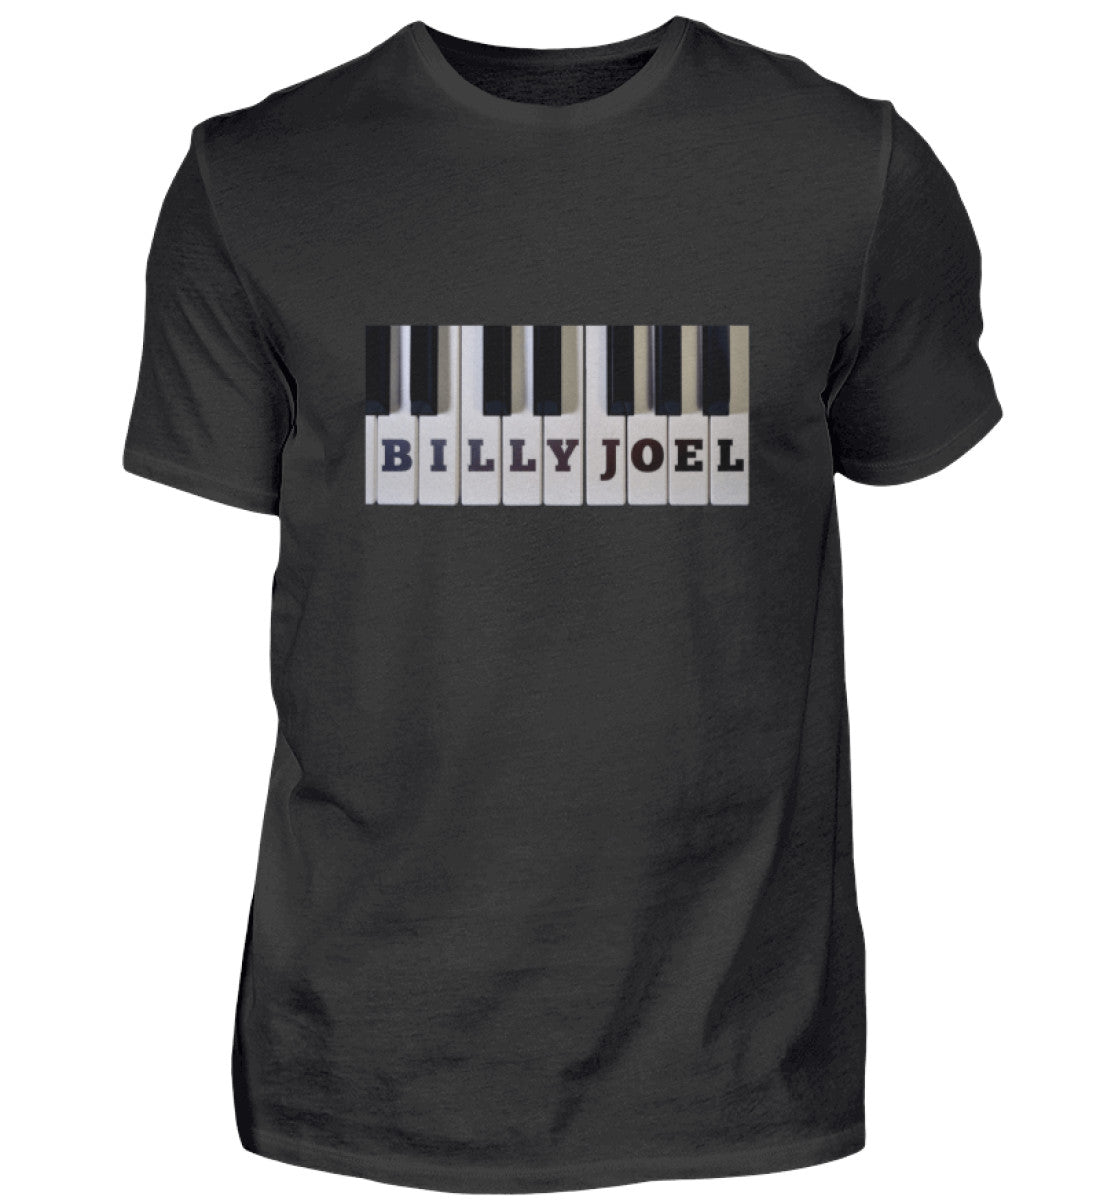 Billy Joel T-Shirt Men